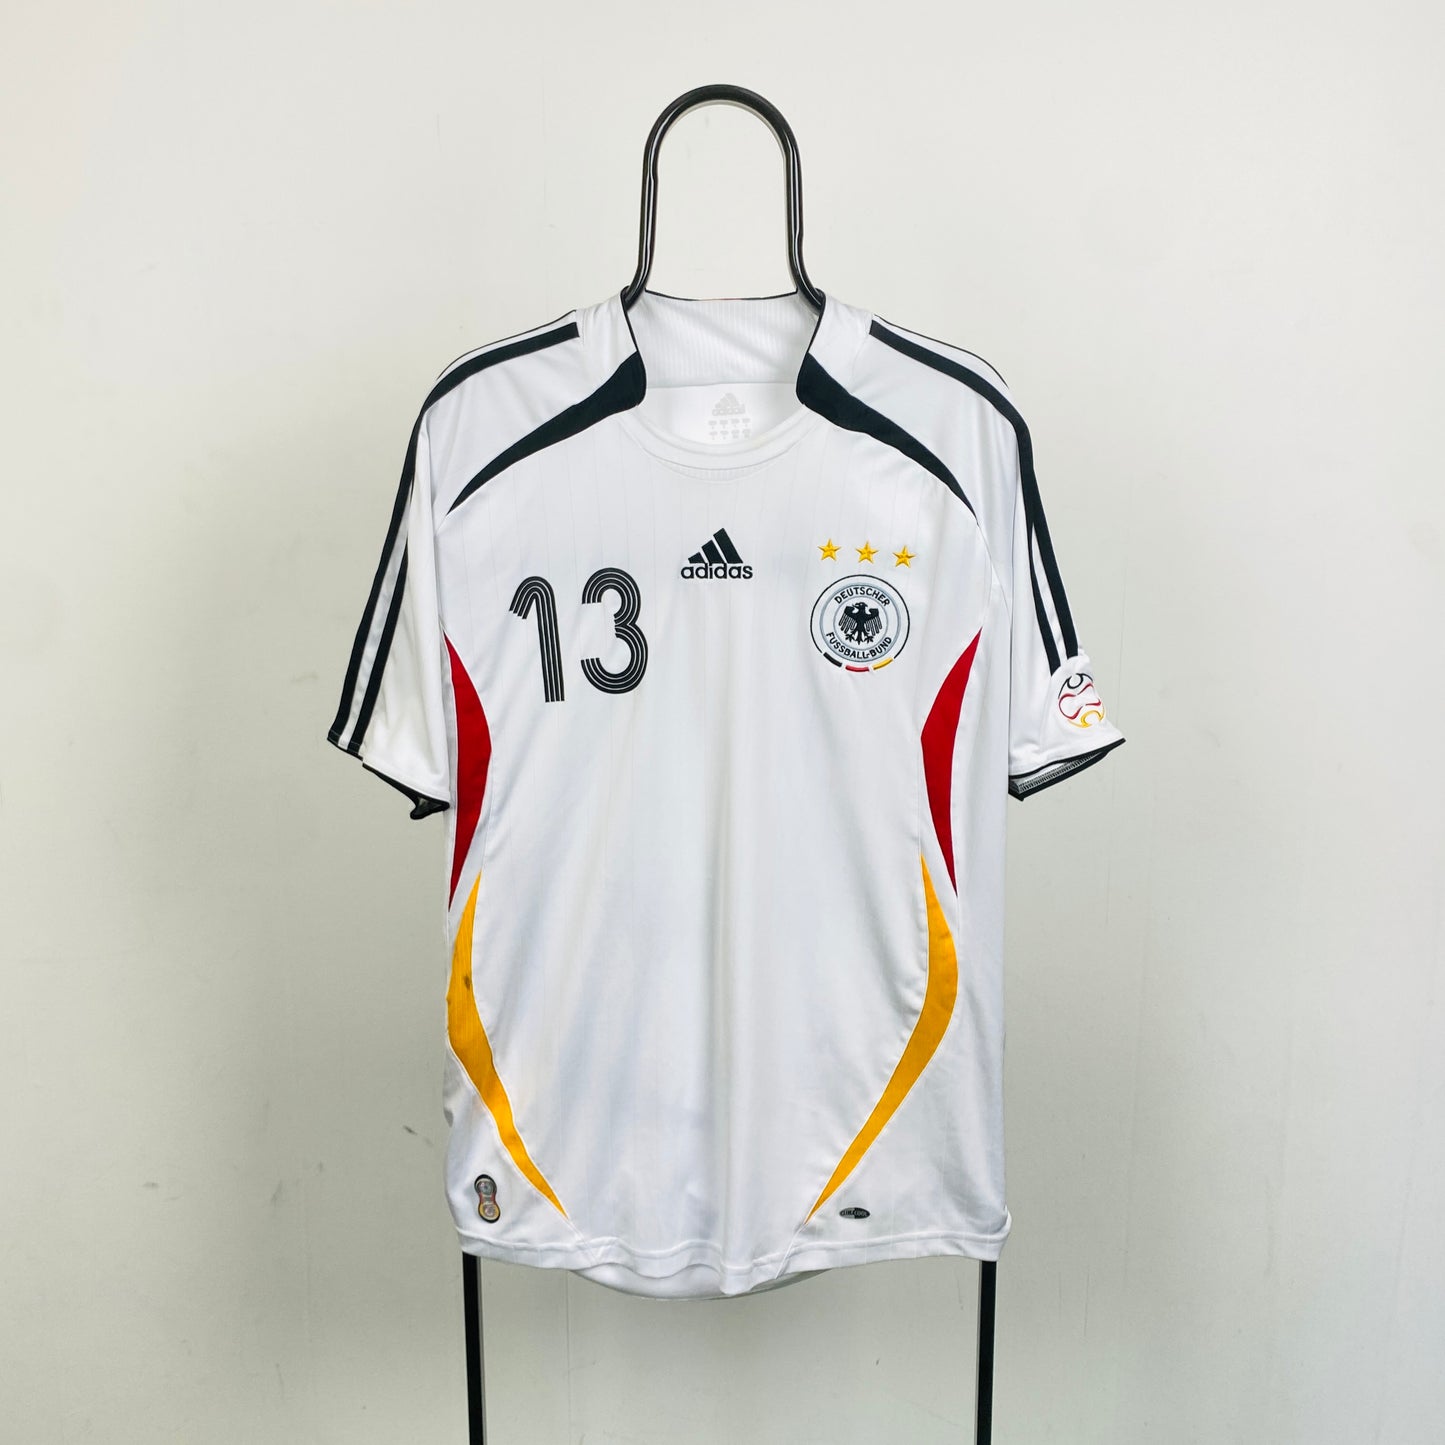 00s Adidas Germany Ballack Football Shirt T-Shirt White Large